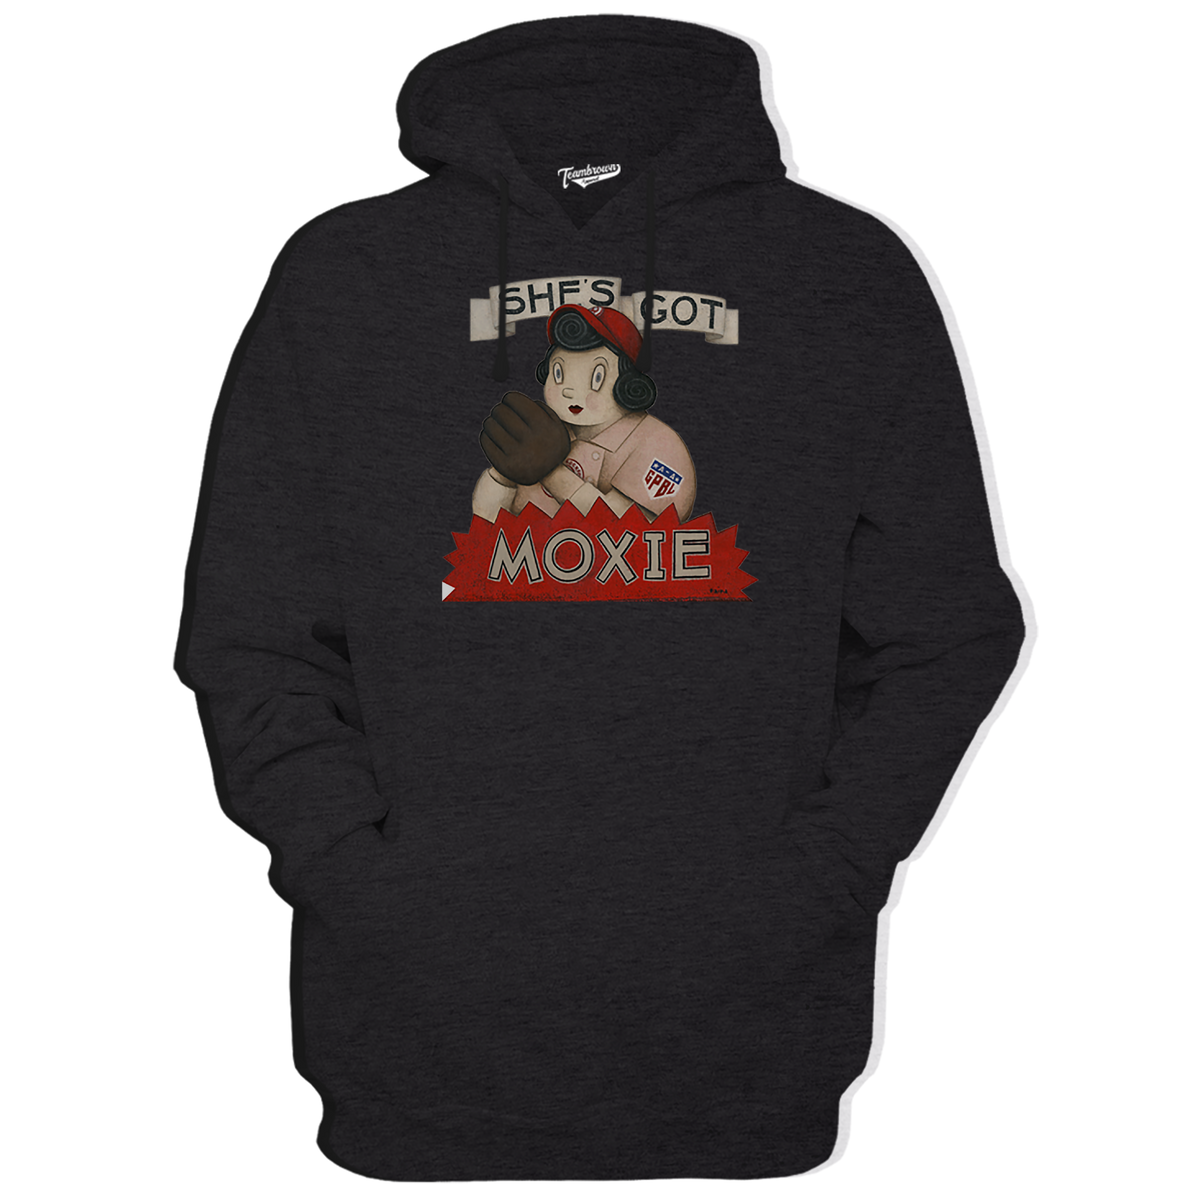 Moxie - Unisex Premium Hoodie | Officially Licensed - AAGPBL